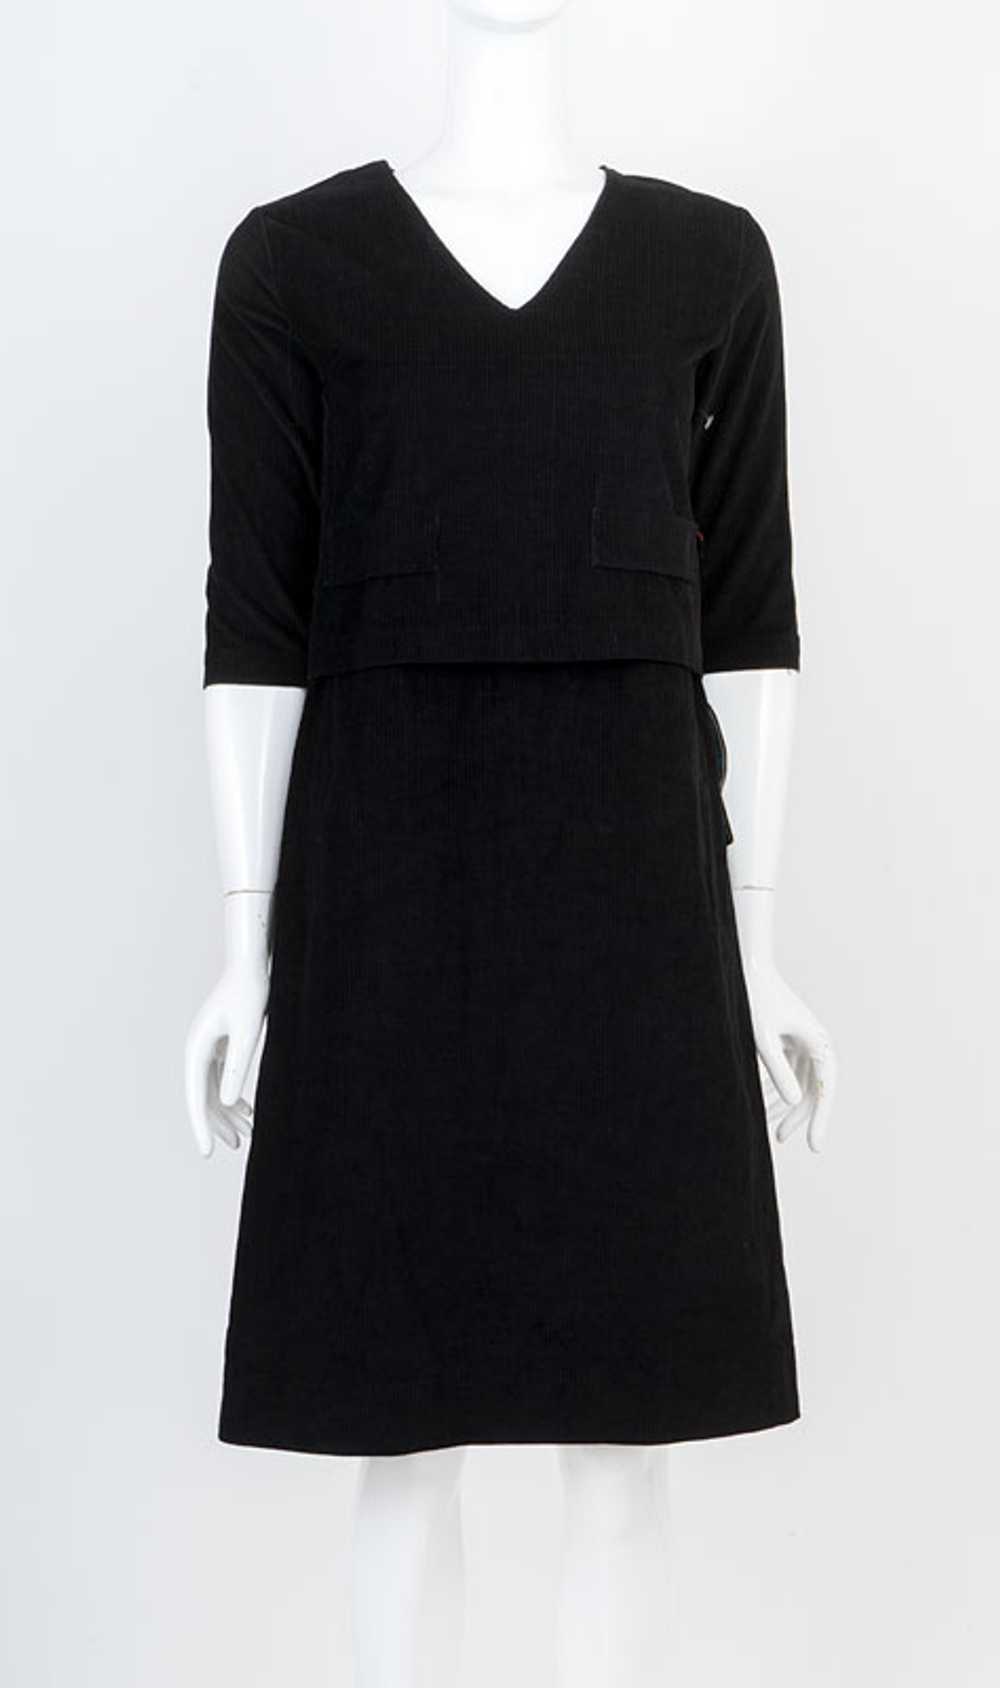 Late 50s Corduroy Dress - image 2